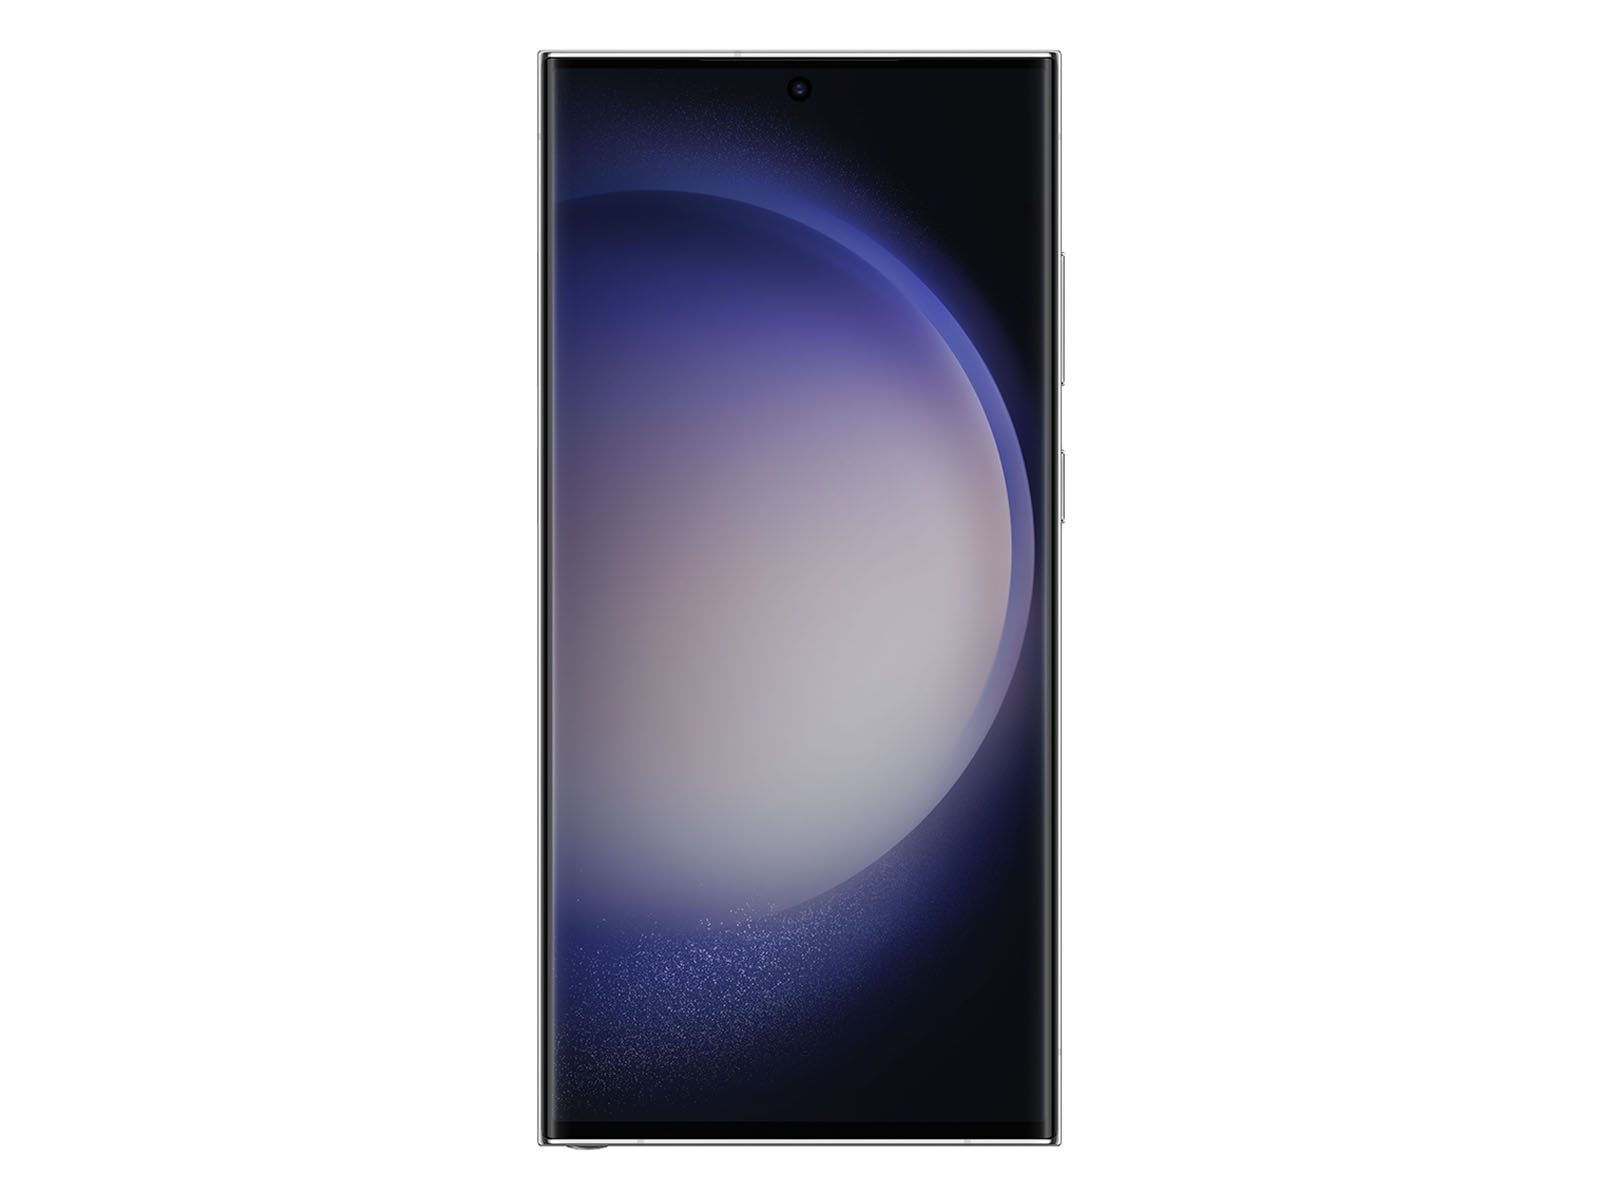 Samsung galaxy s23 ultra 1tb